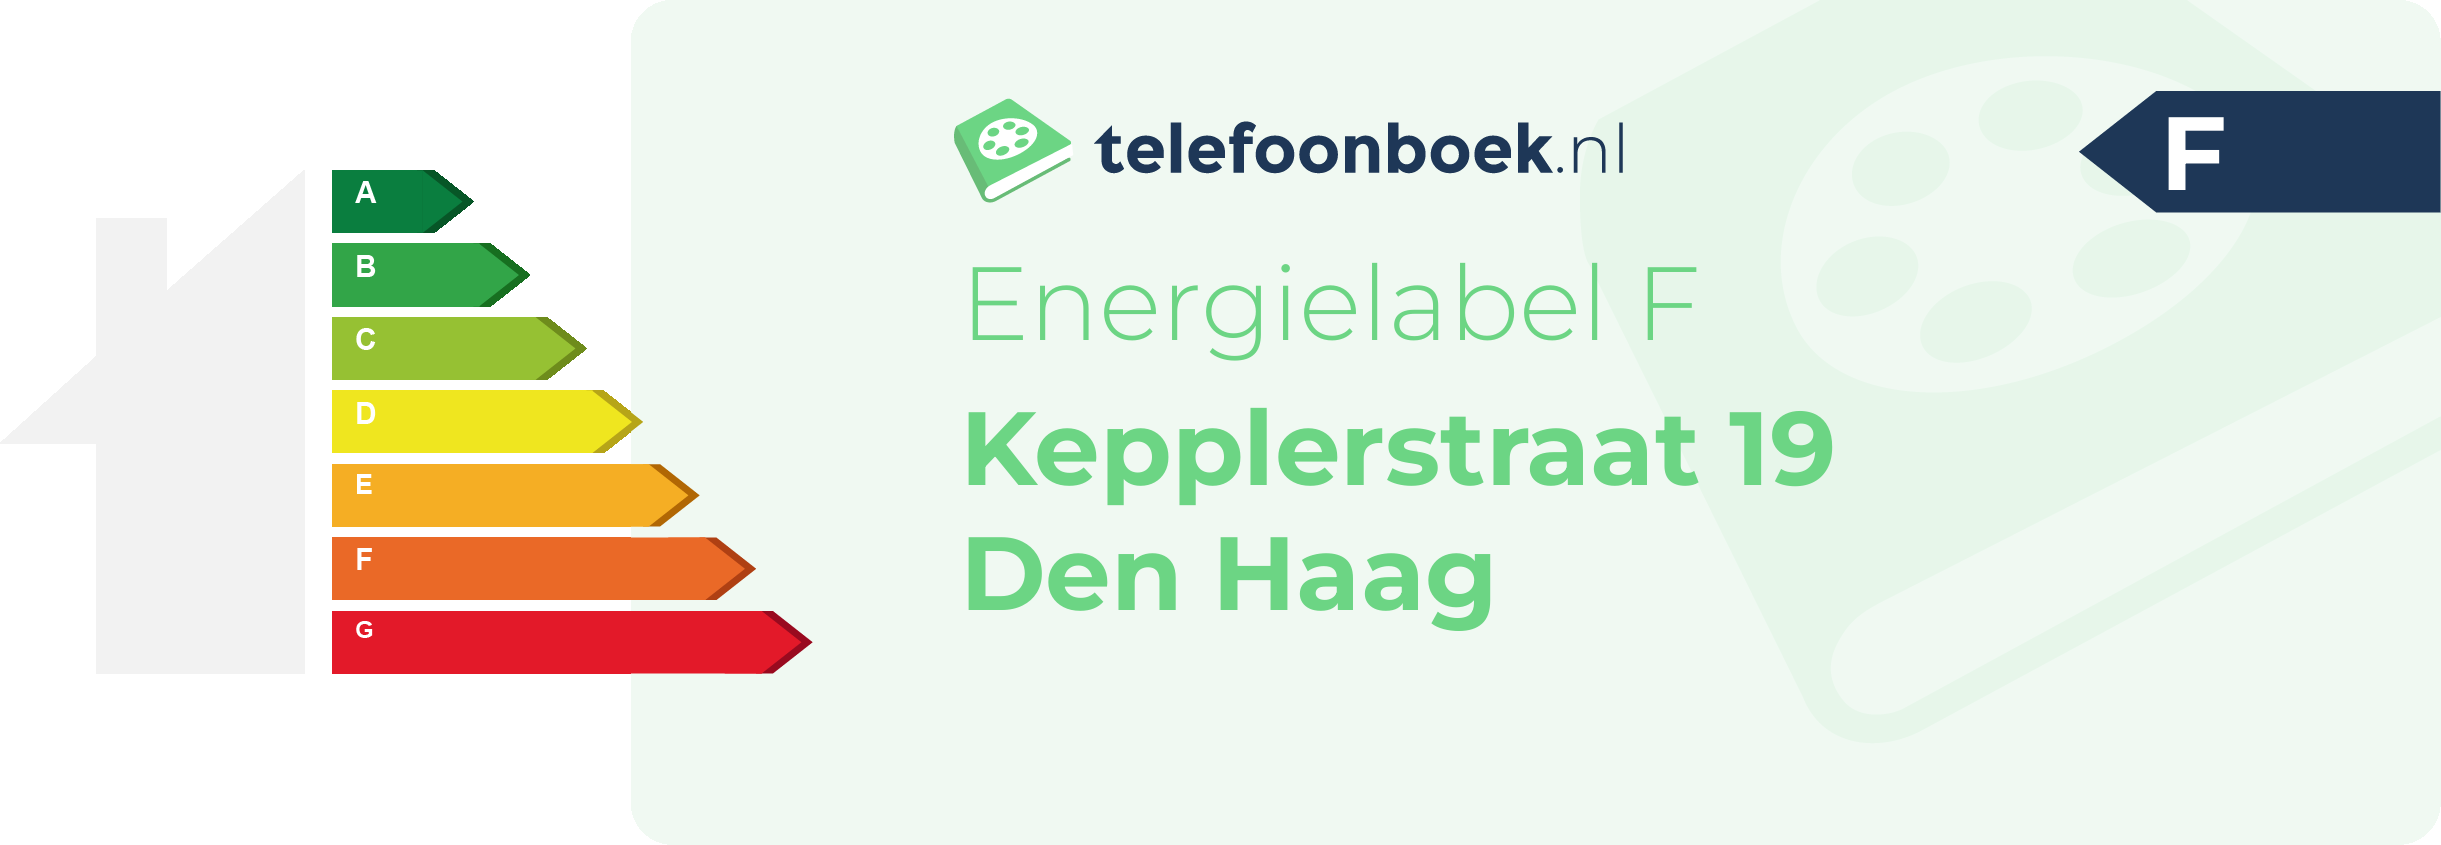 Energielabel Kepplerstraat 19 Den Haag